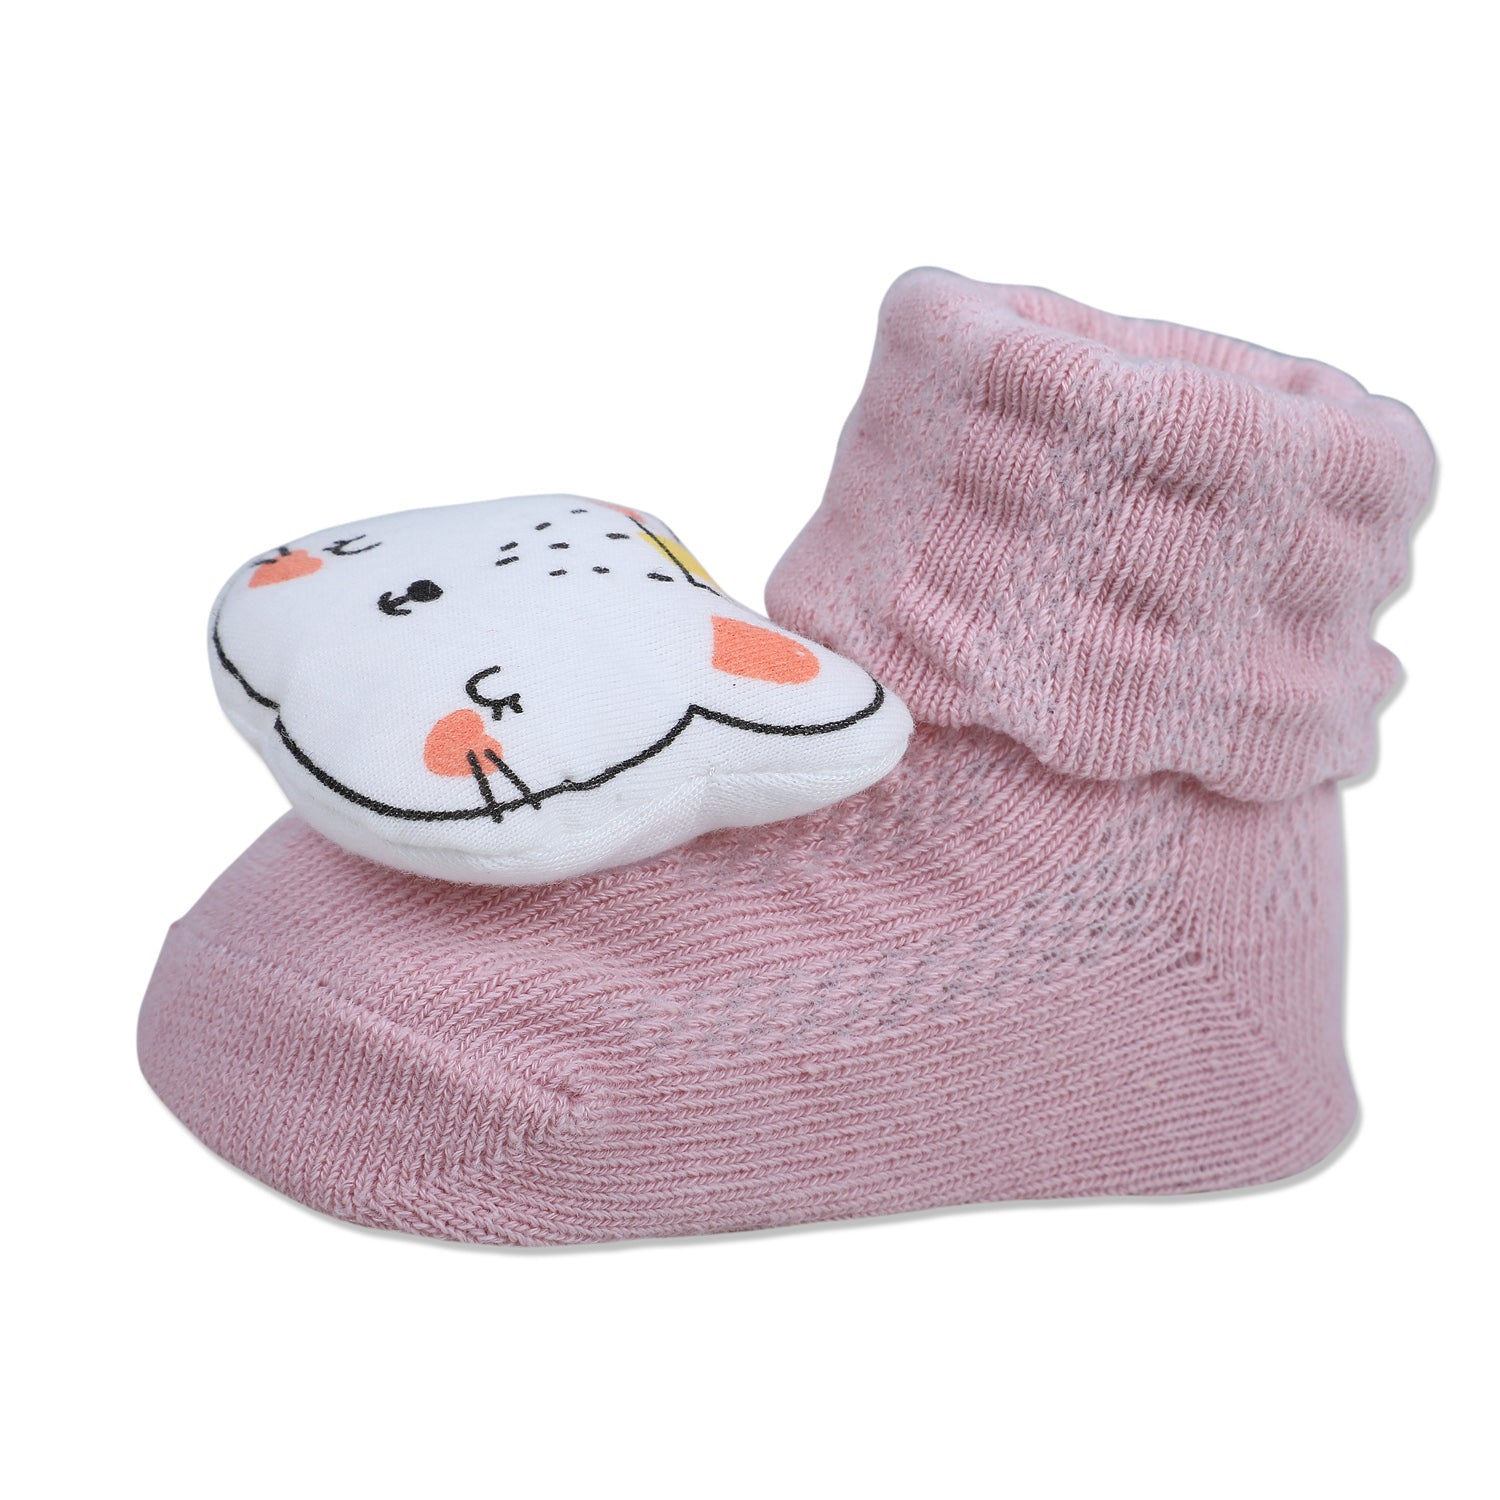 Baby Moo Cute Bunny Cotton Anti-Skid 3D Socks - Pink - Baby Moo